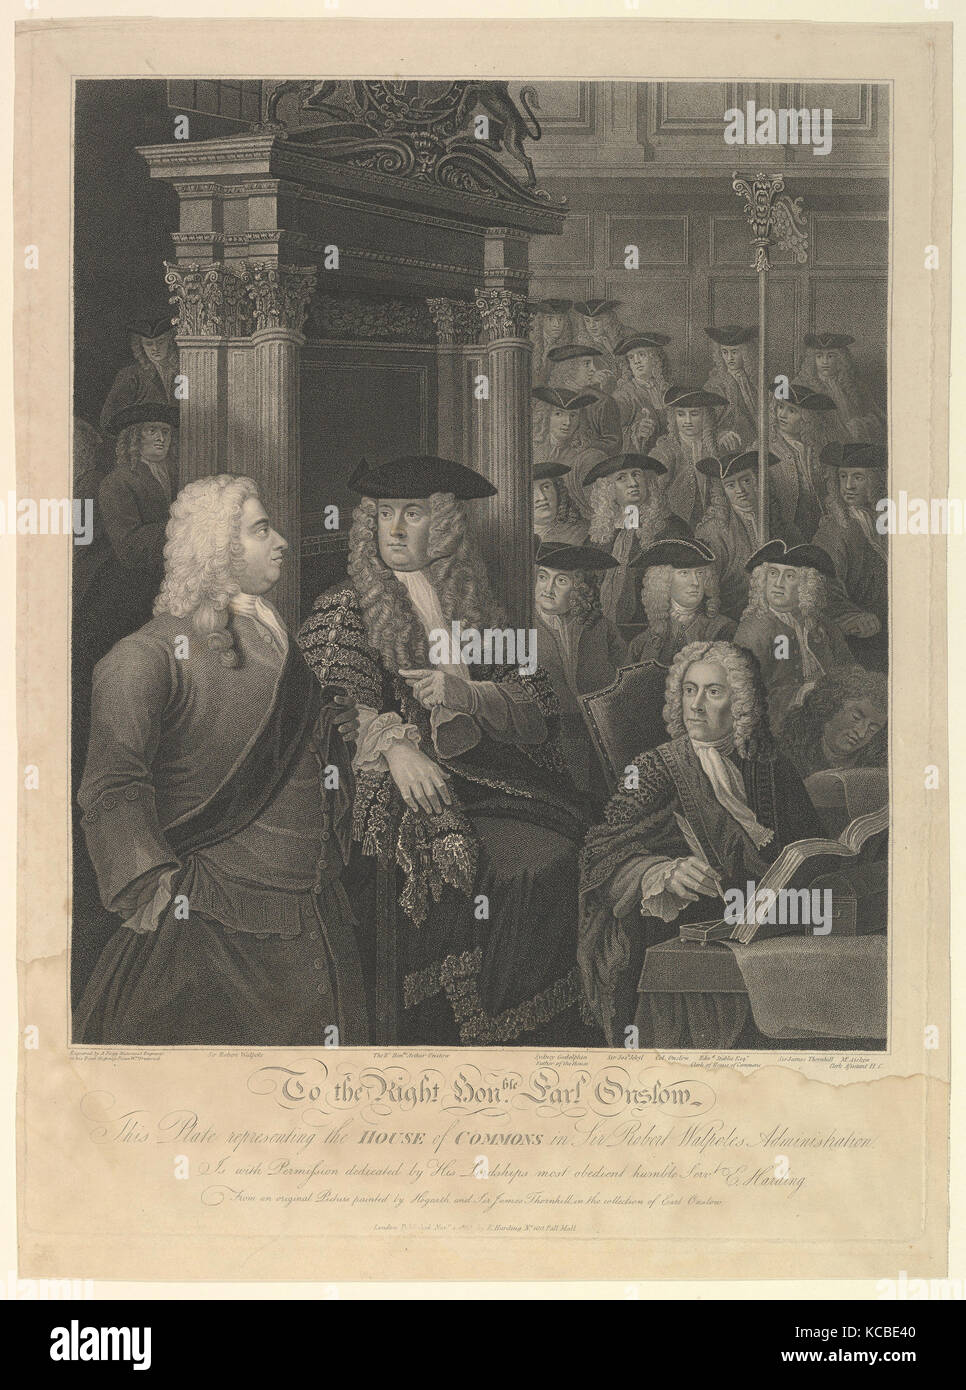 Chambre des communes - l'Administration de Sir Robert Walpole, après William Hogarth, le 1 novembre 1803 Banque D'Images